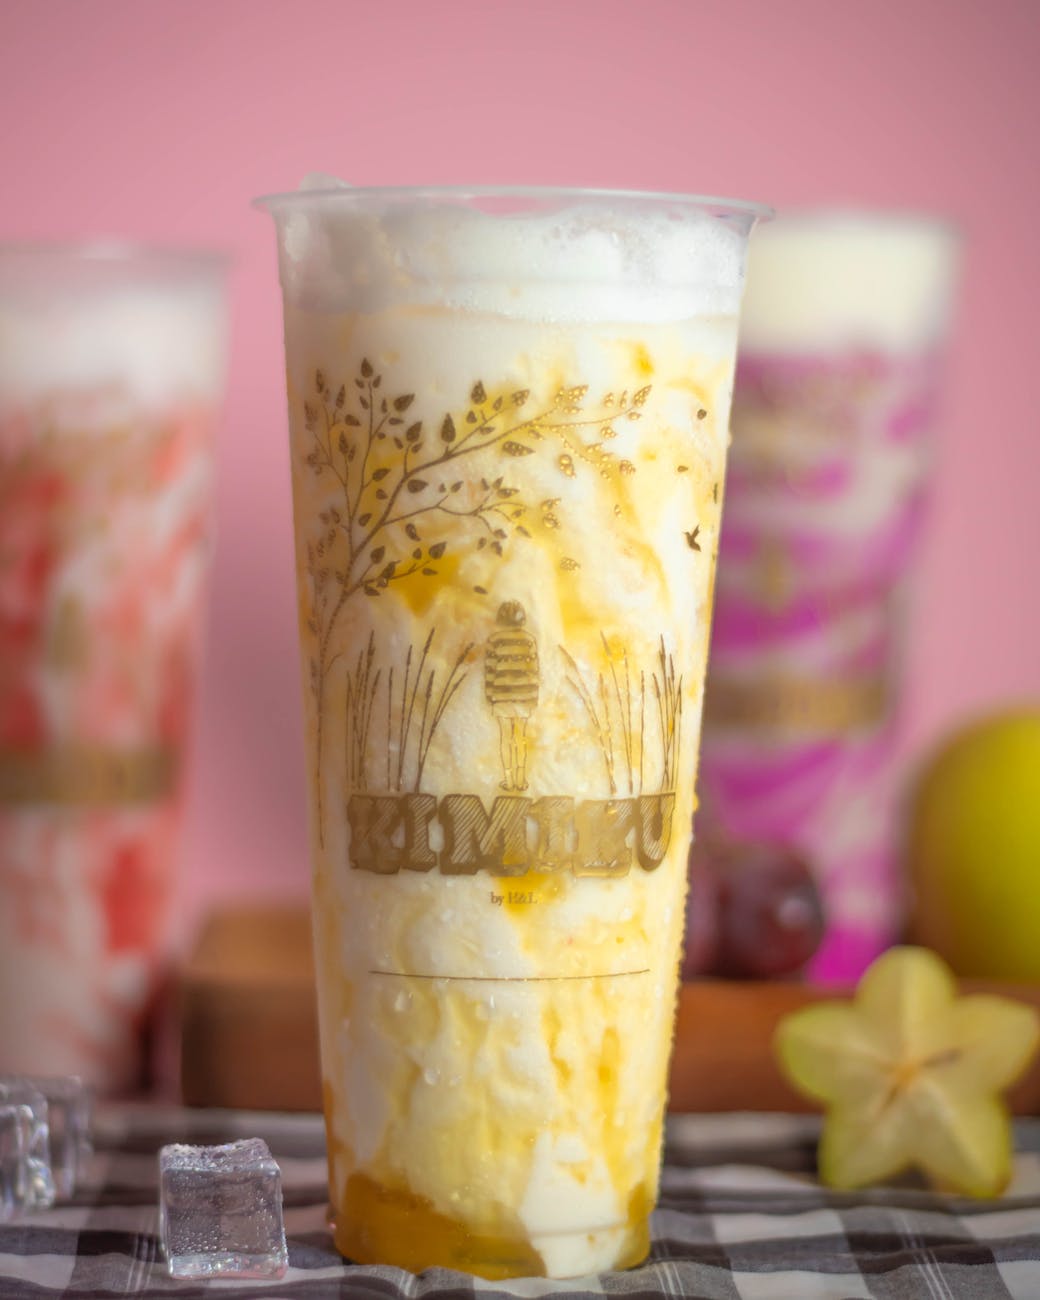 glass of banana milkshake served on table